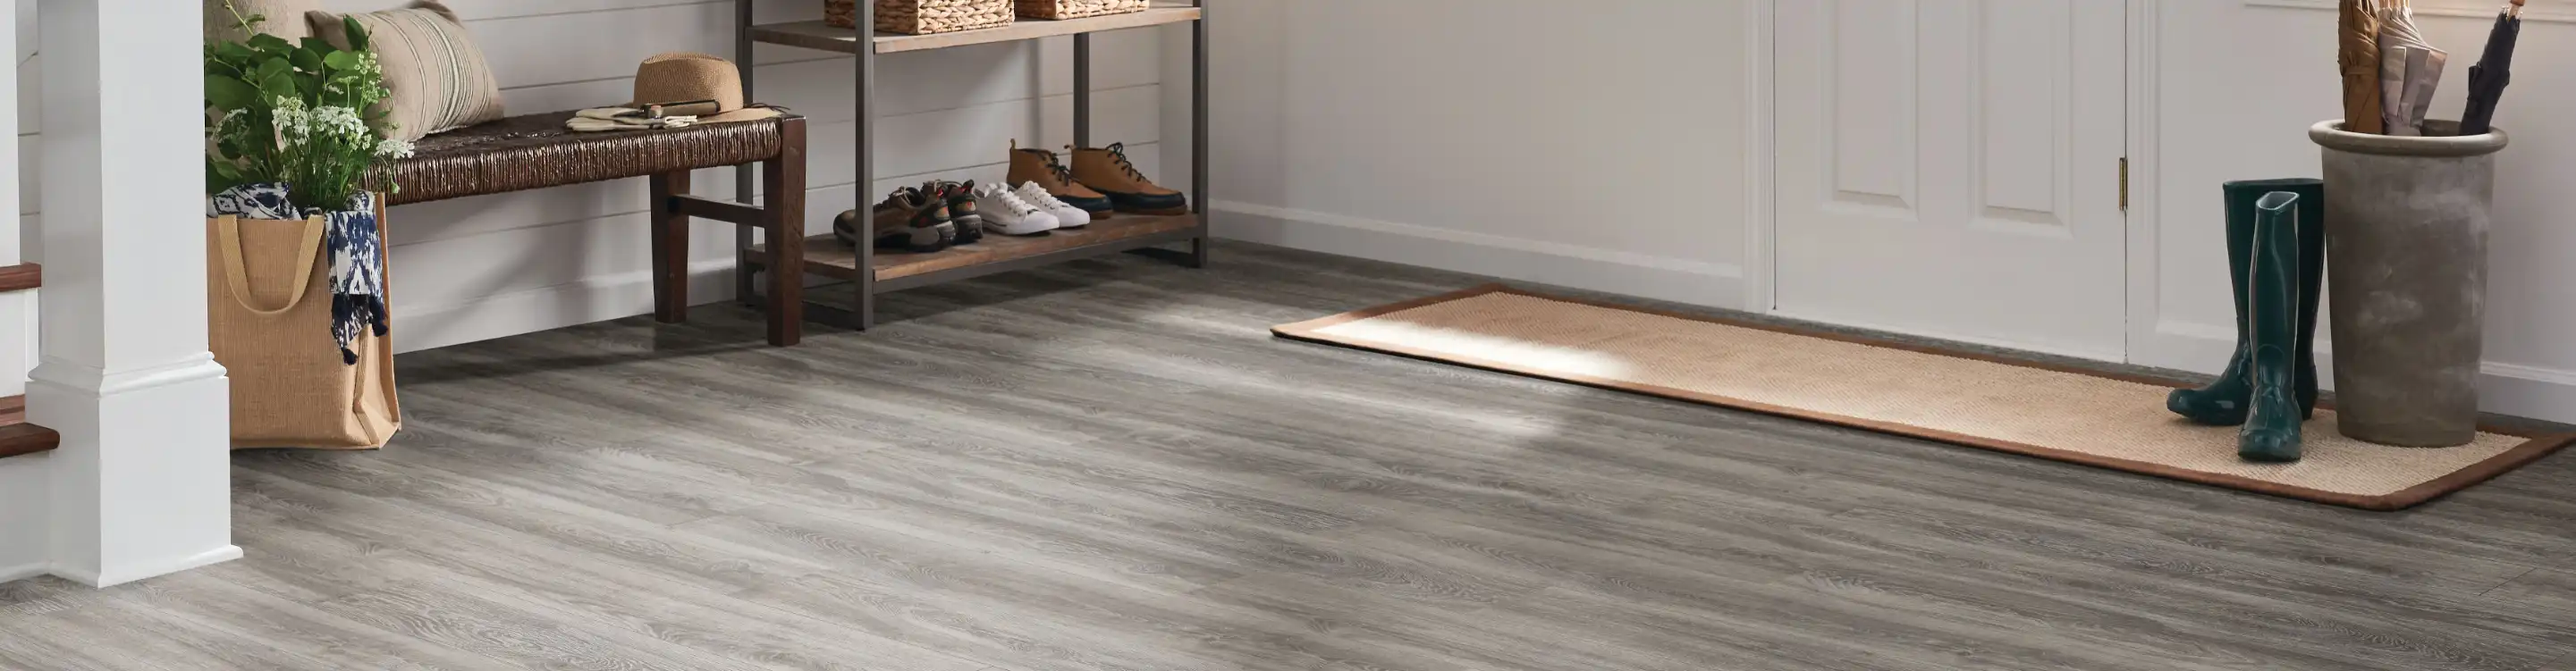 Gray laminate floors in an entryway